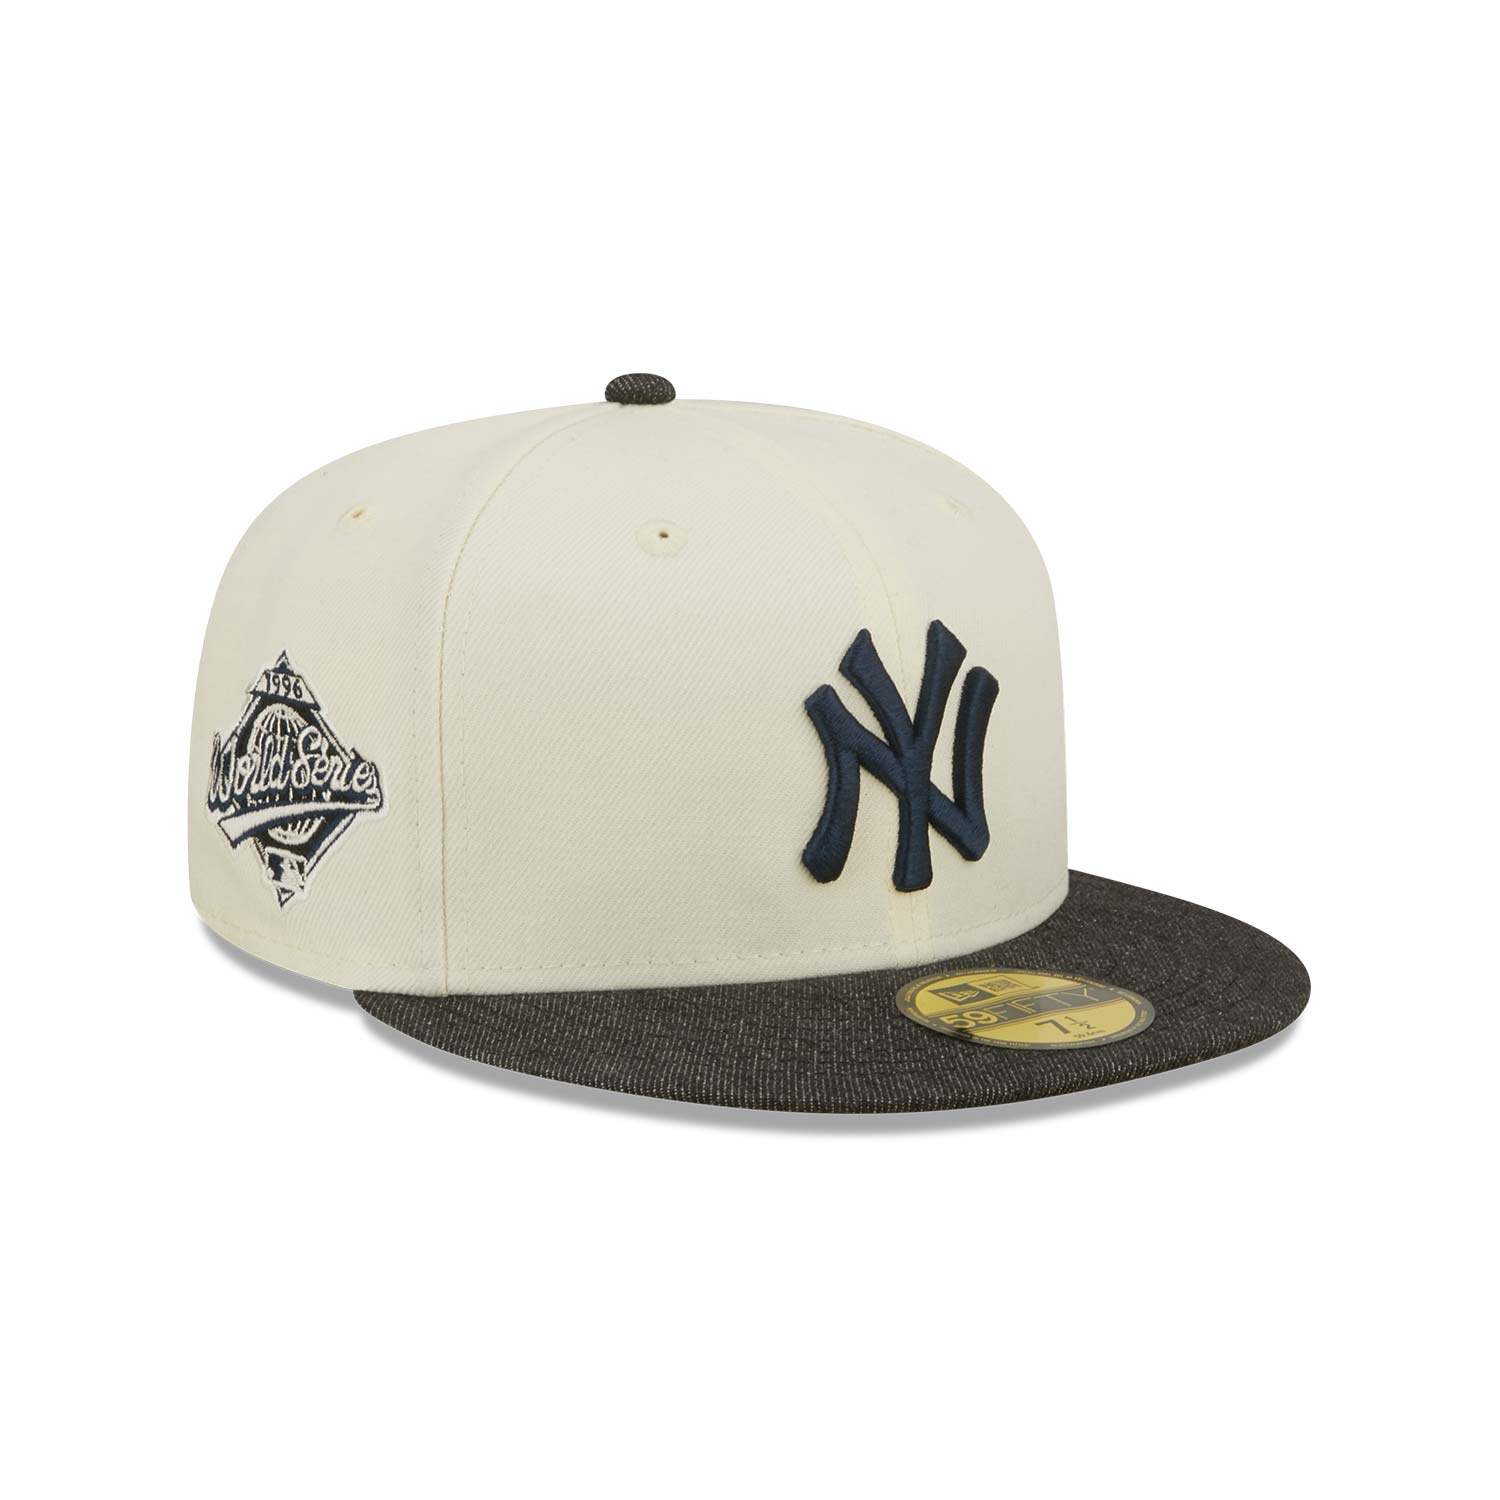 Official New Era New York Yankees MLB Two Tone Chrome White